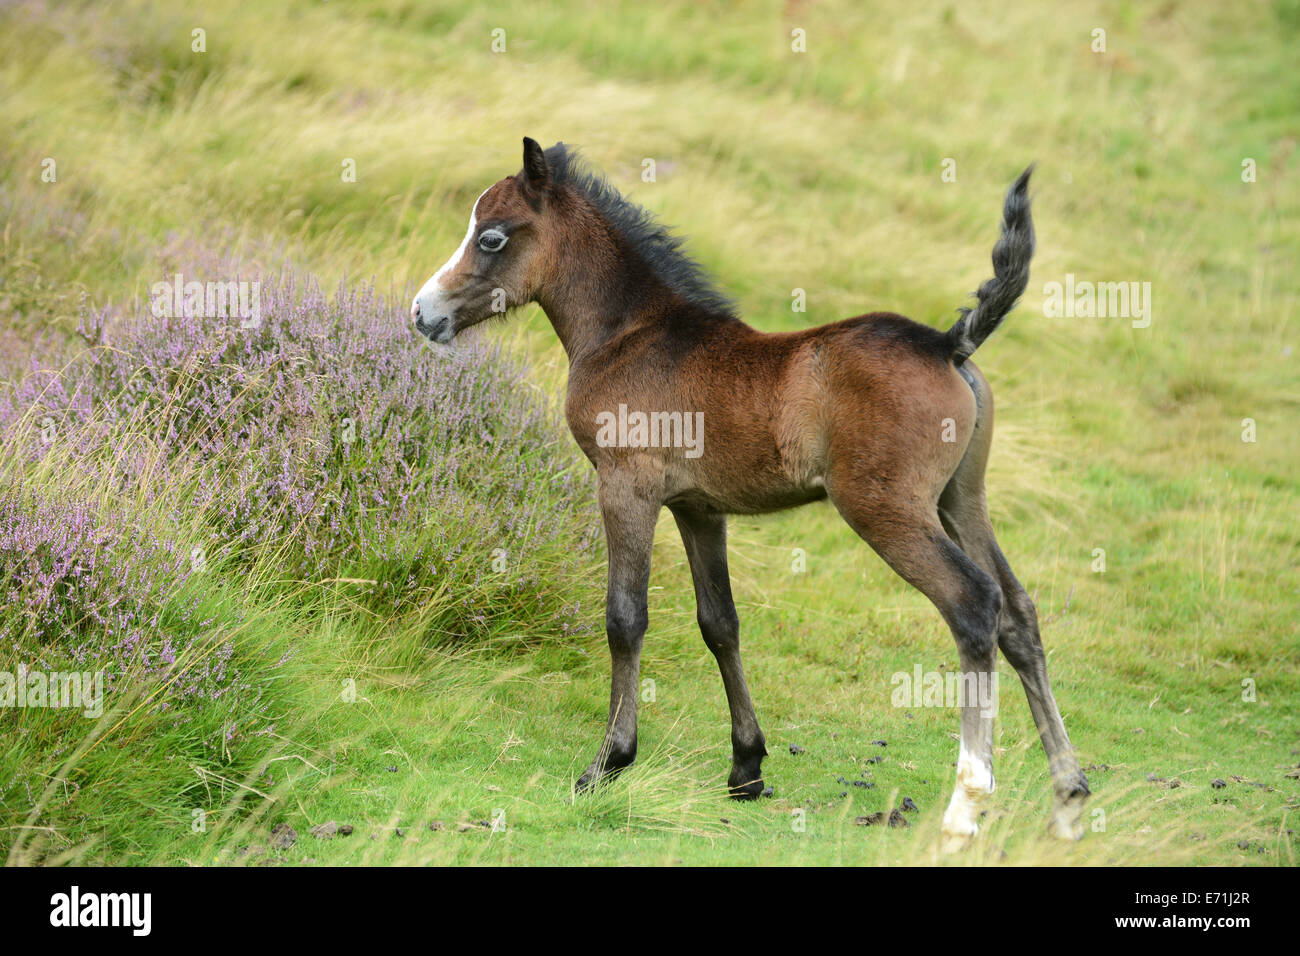 Wild pony ponies foal cute animal Long Mynd Shropshire british wildlife britain Uk Stock Photo